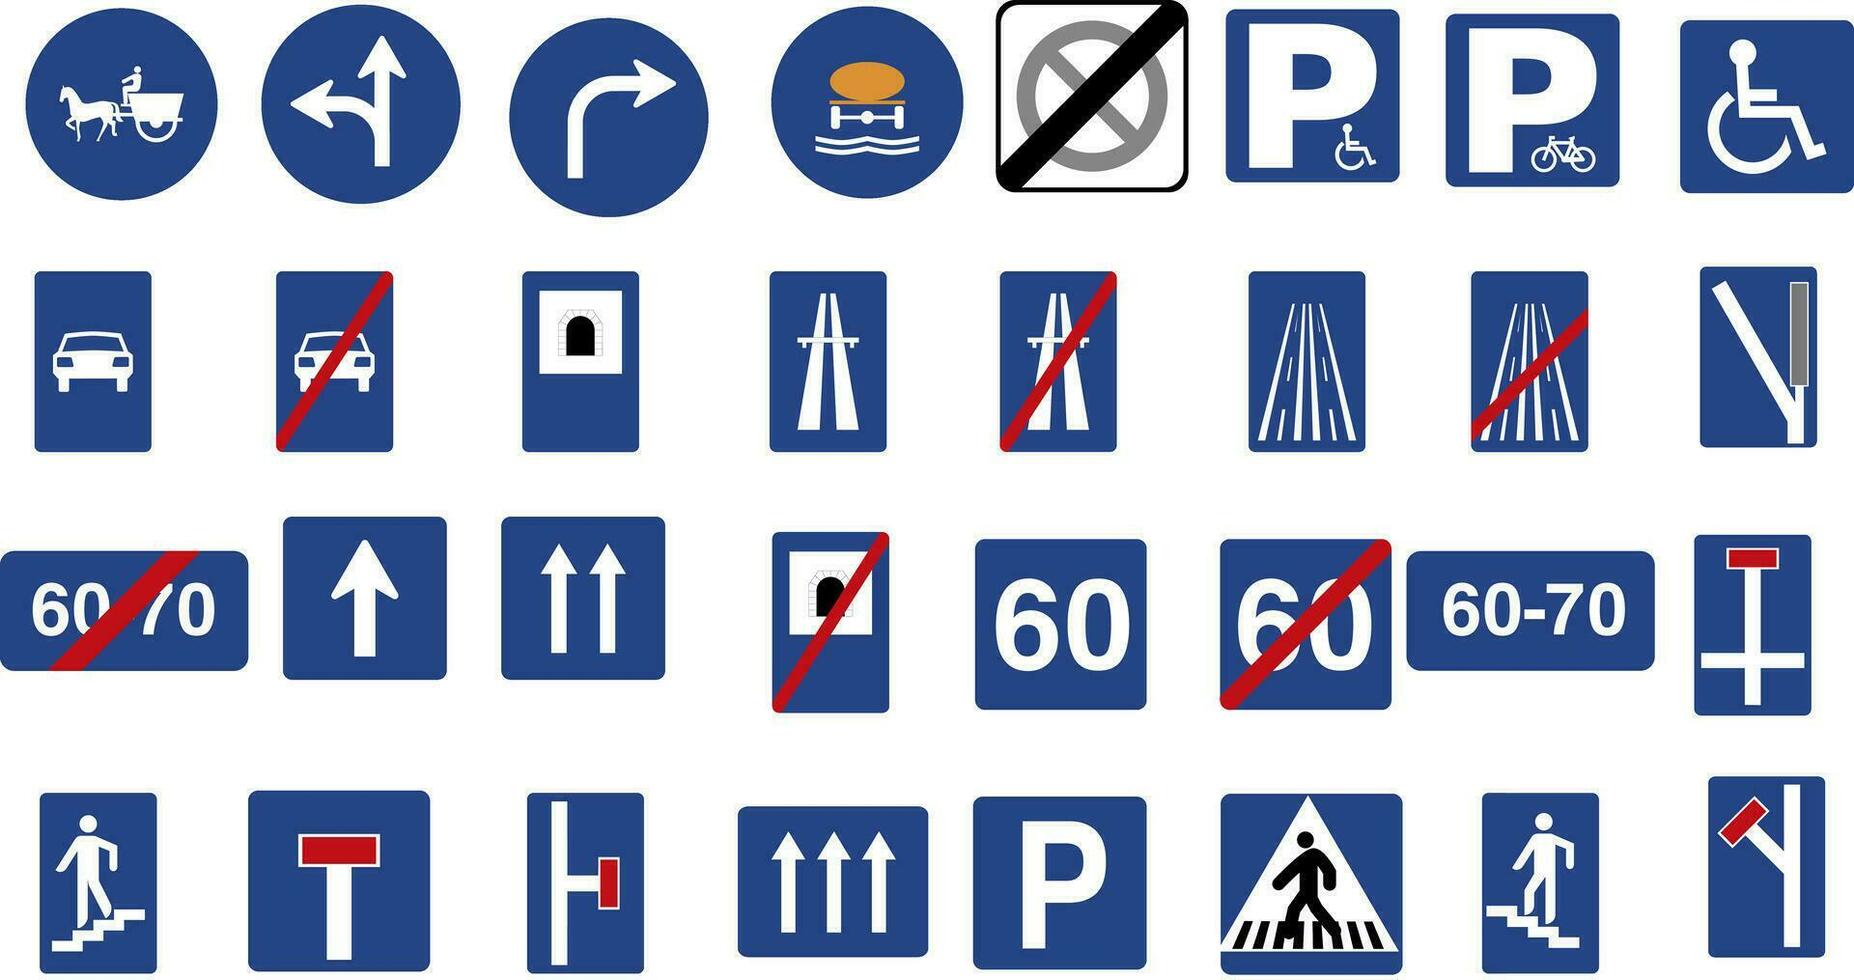 Obligation traffic sign vector